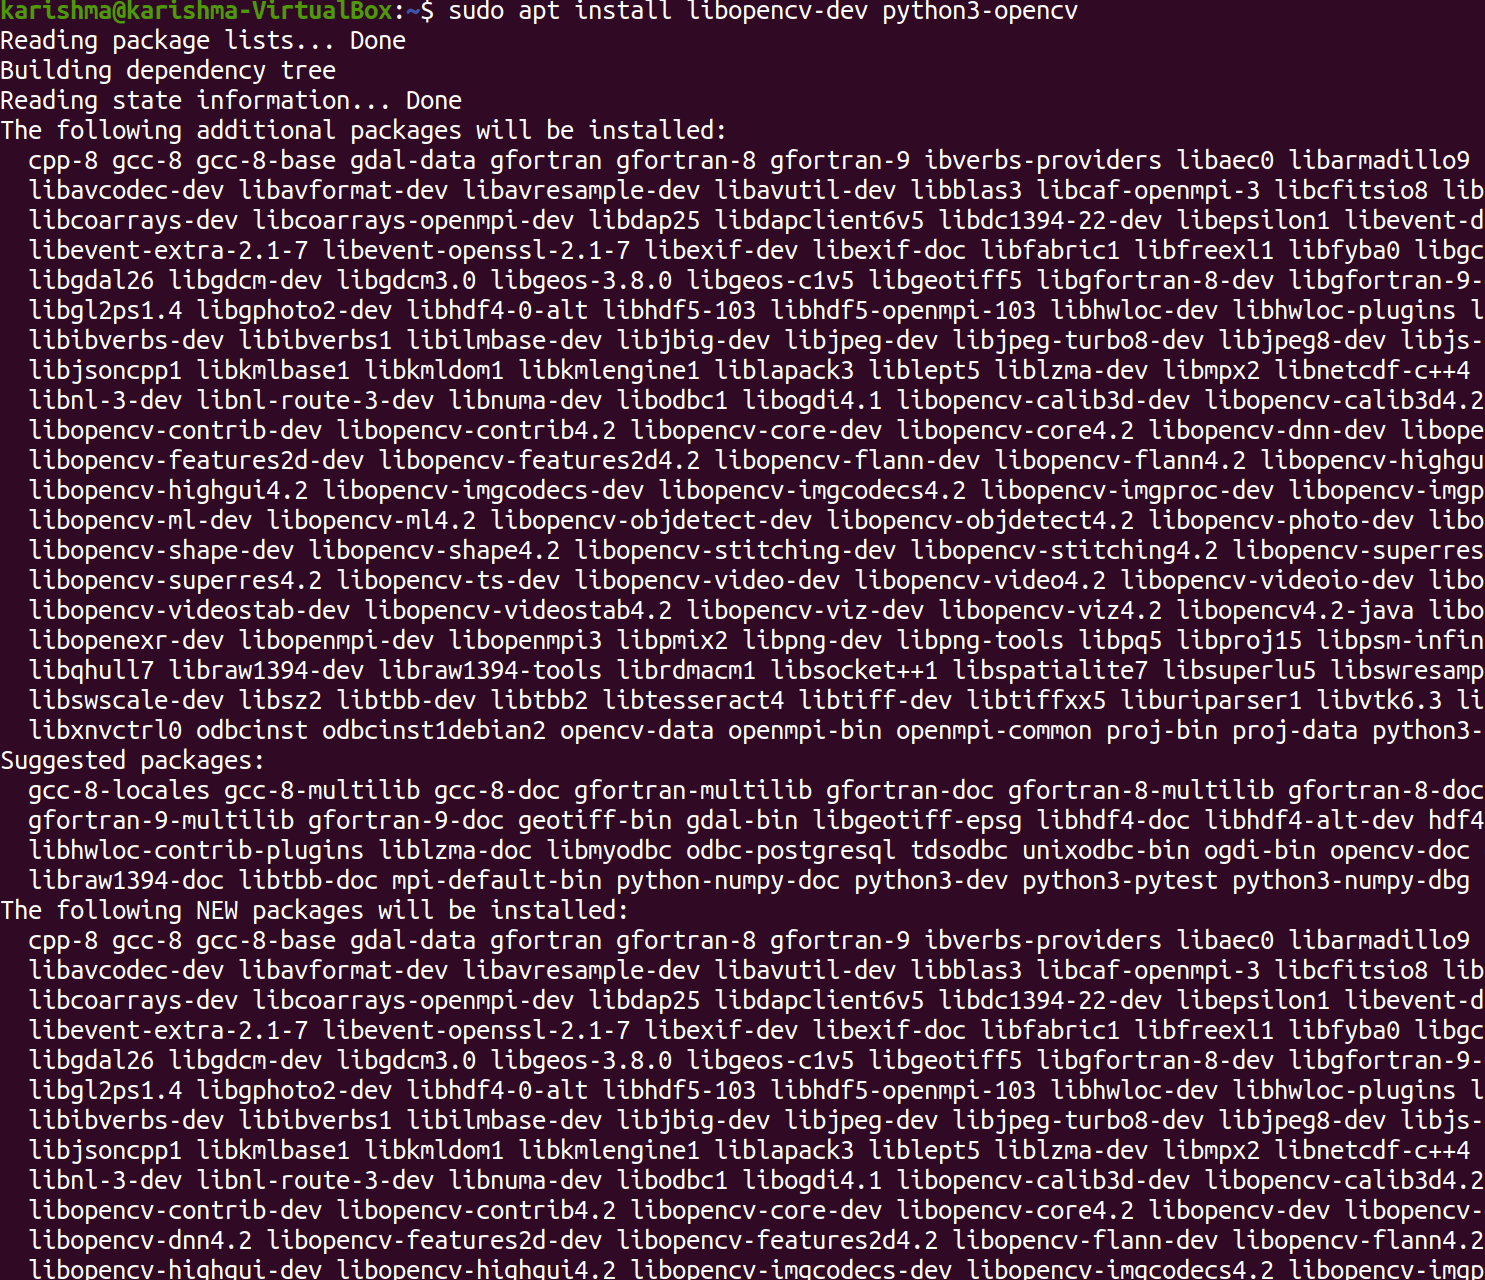 Install OpenCV in Ubuntu